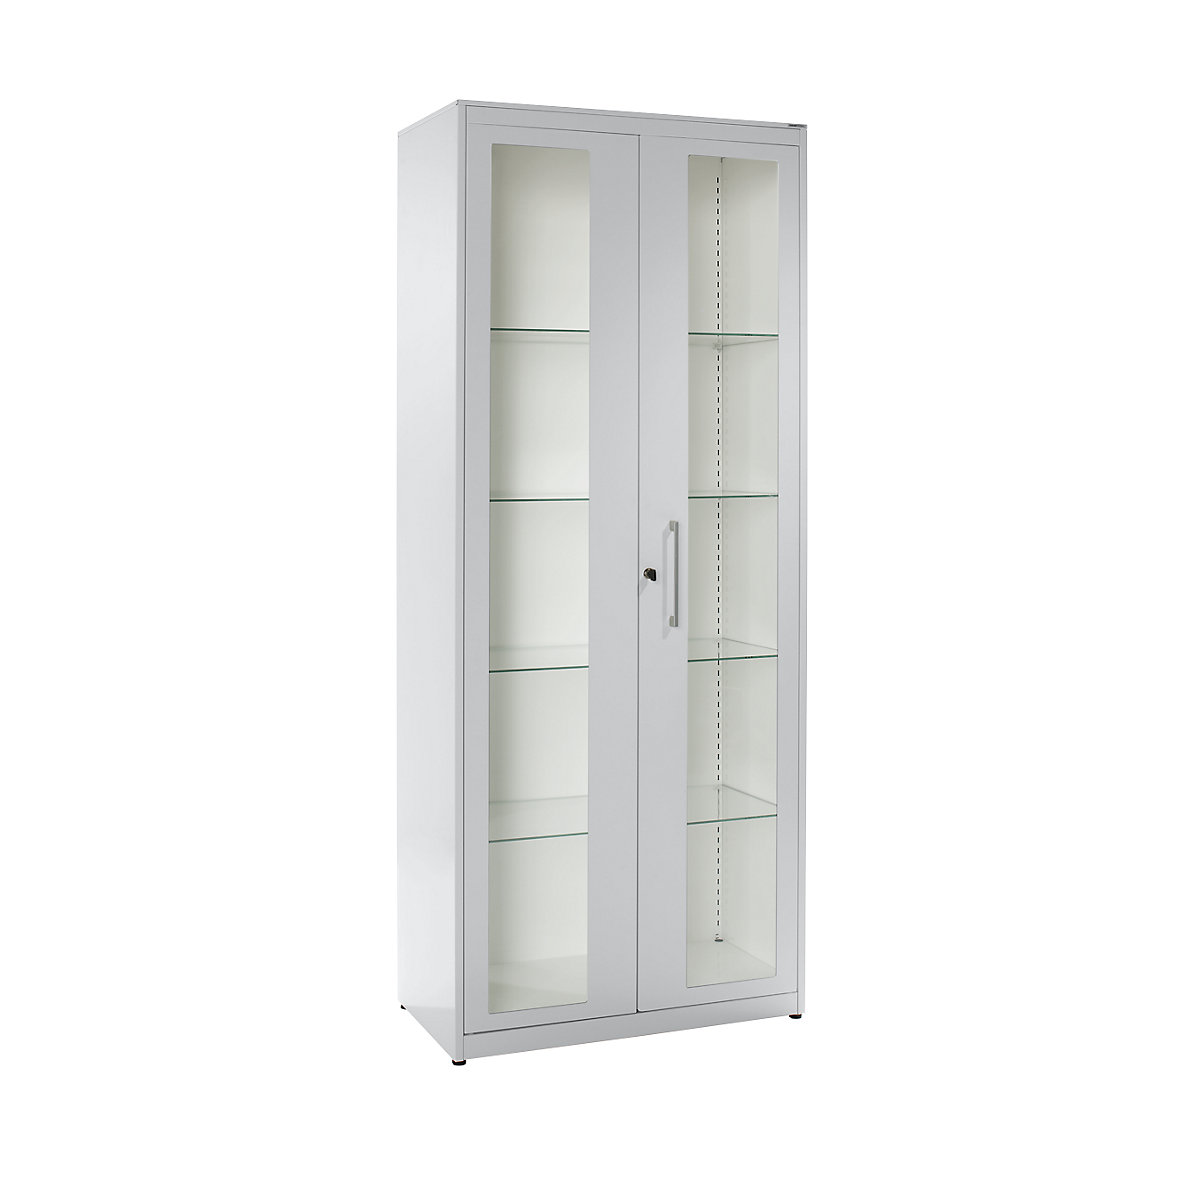 mauser – First aid cupboard, 2 hinged doors, 4 shelves, light grey